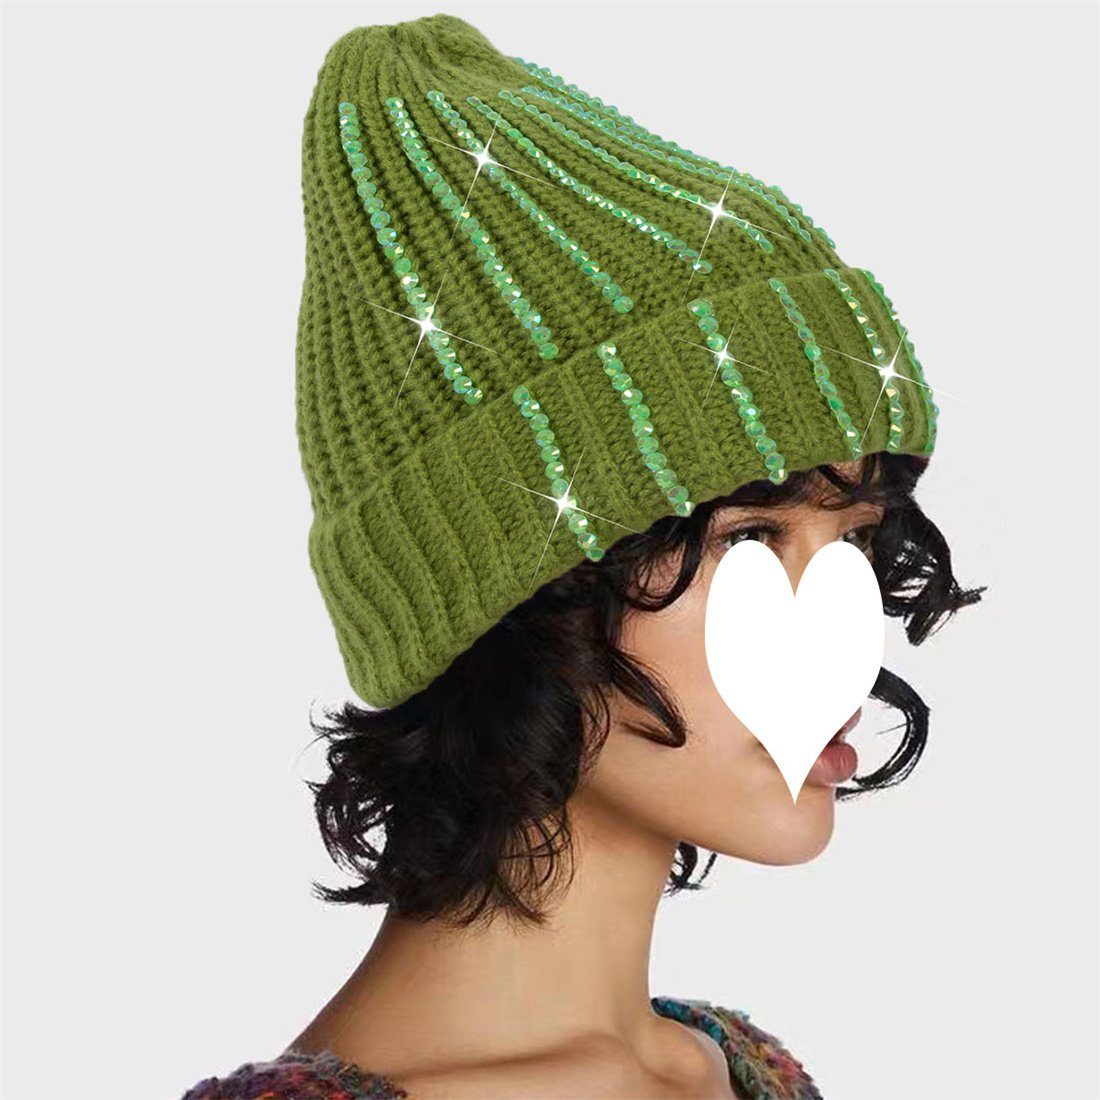 Outdoor-Mode Strickmütze Strickmütze, Winter DÖRÖY Wollmütze verdickt grün Damen warme warme